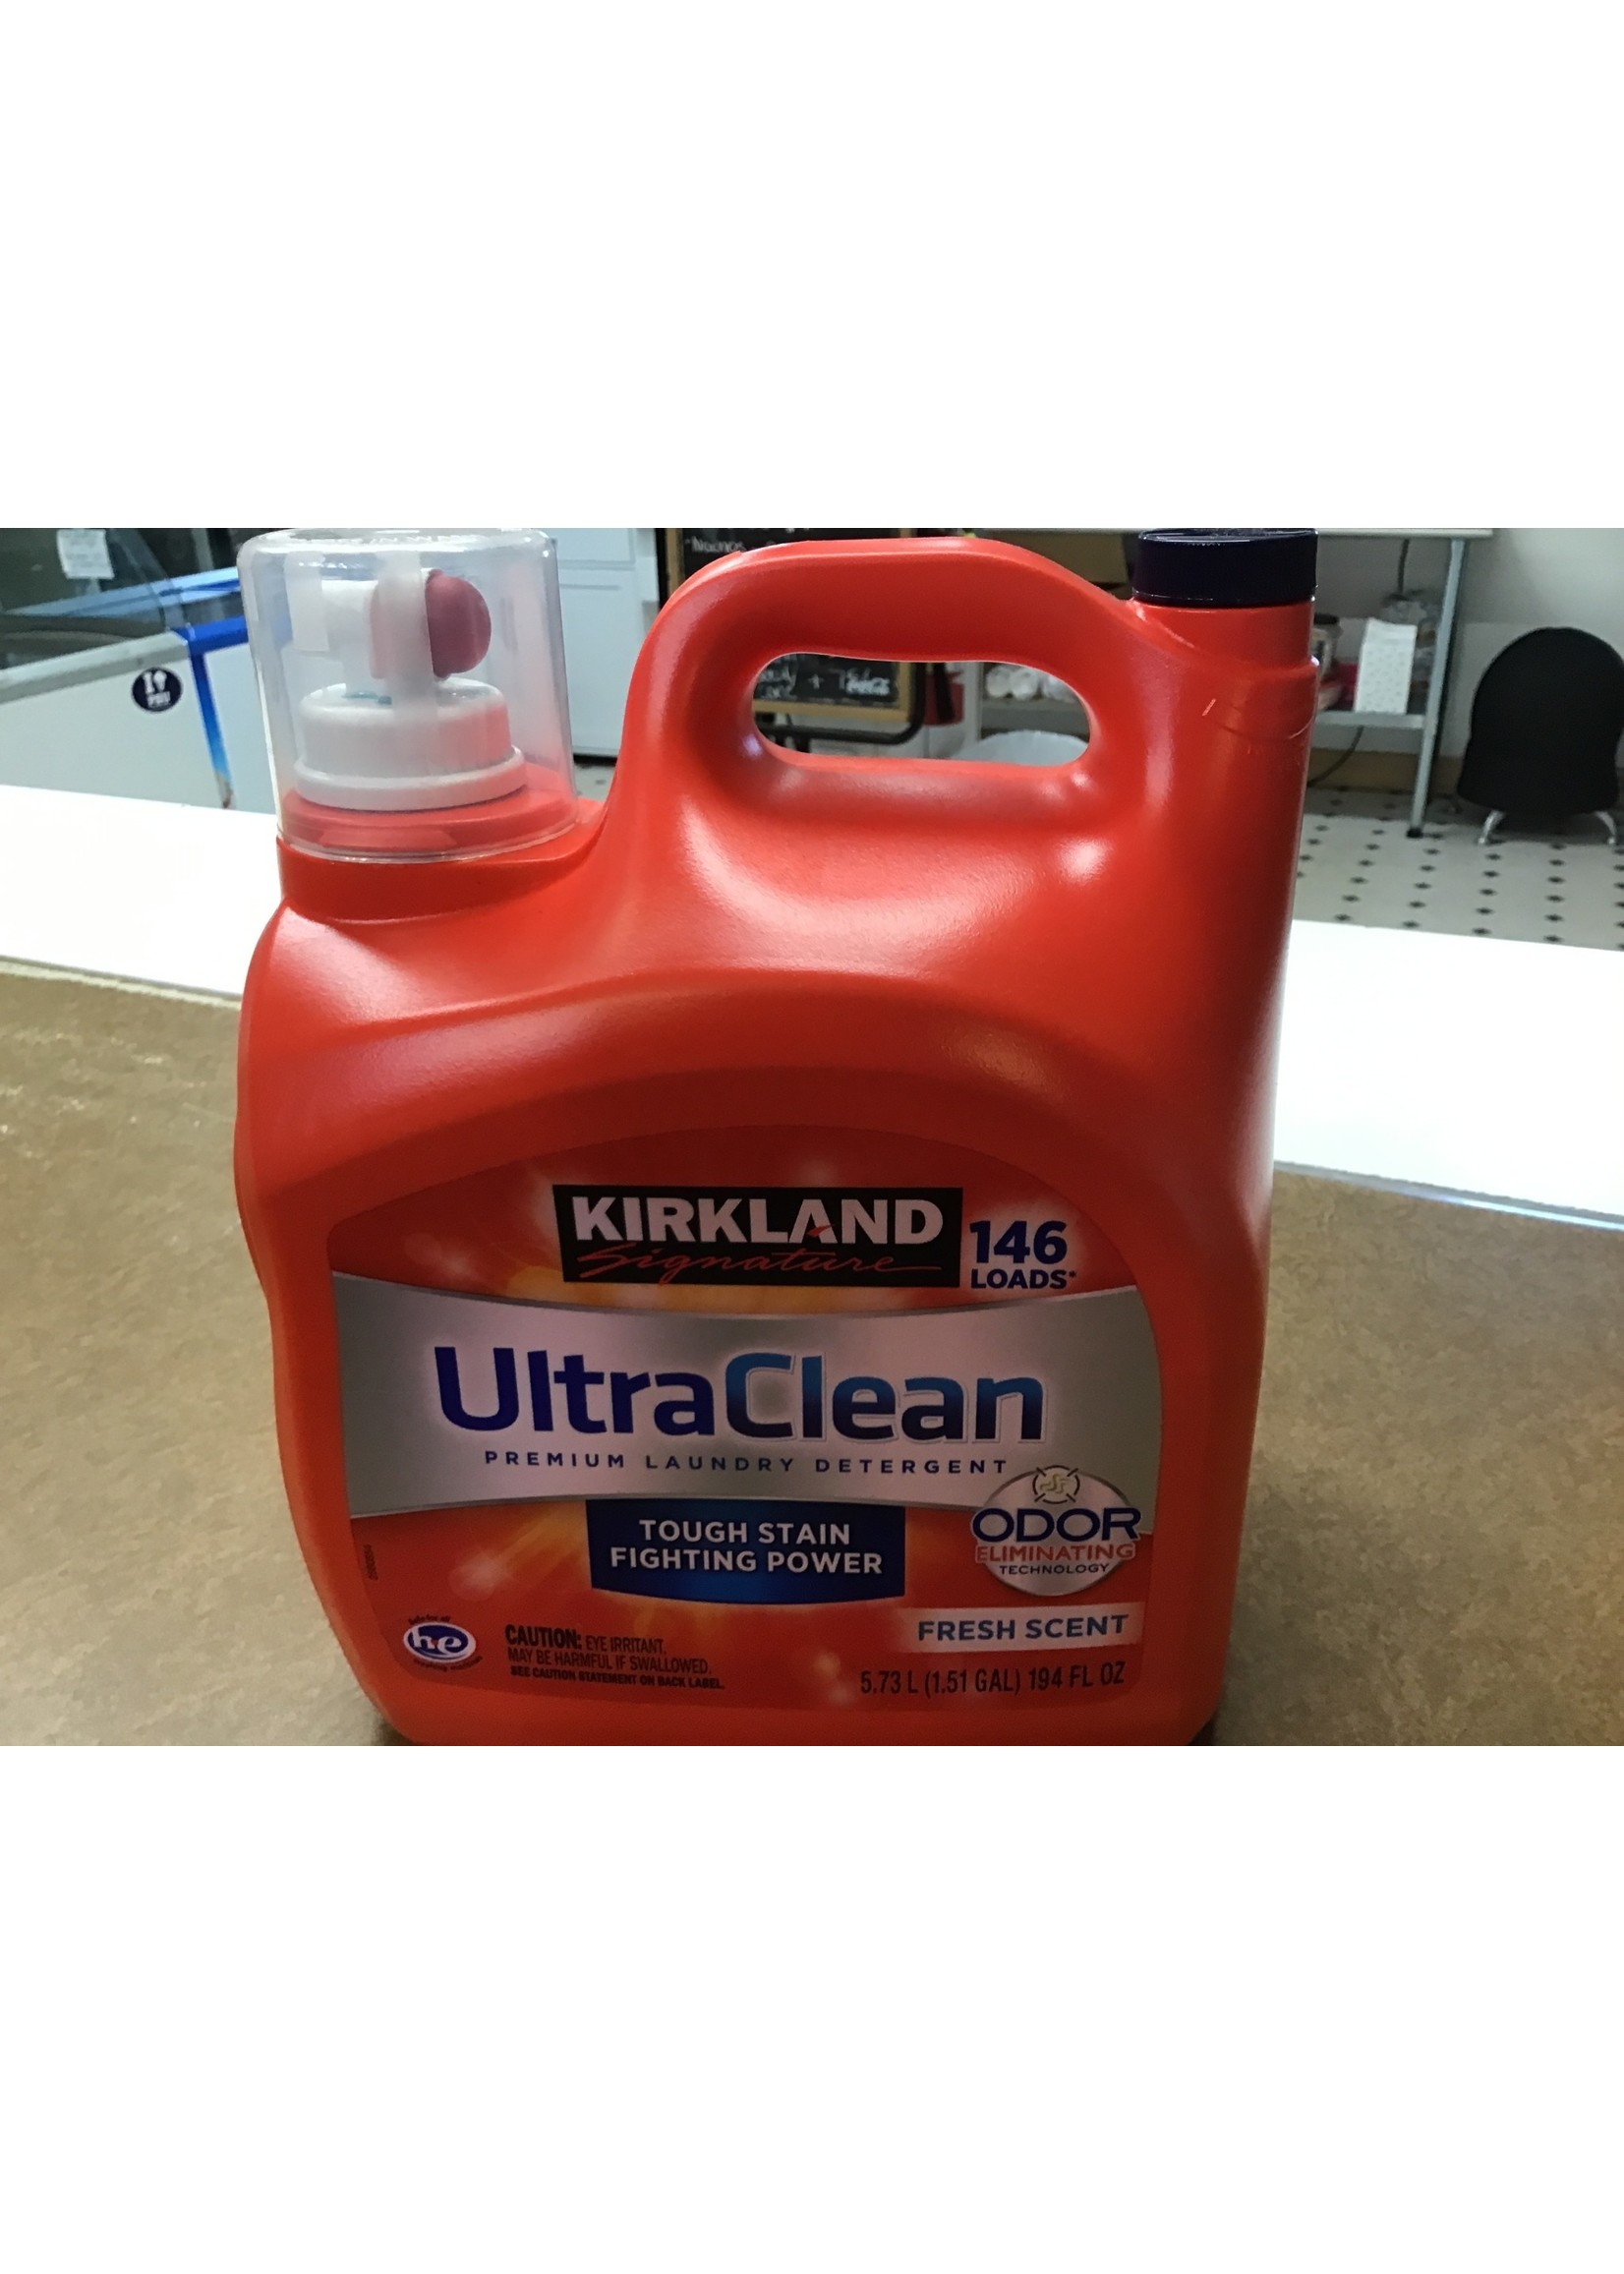 *3/4 full* Kirkland Signature Ultra Clean HE Liquid Laundry Detergent, 146 loads, 194 fl oz